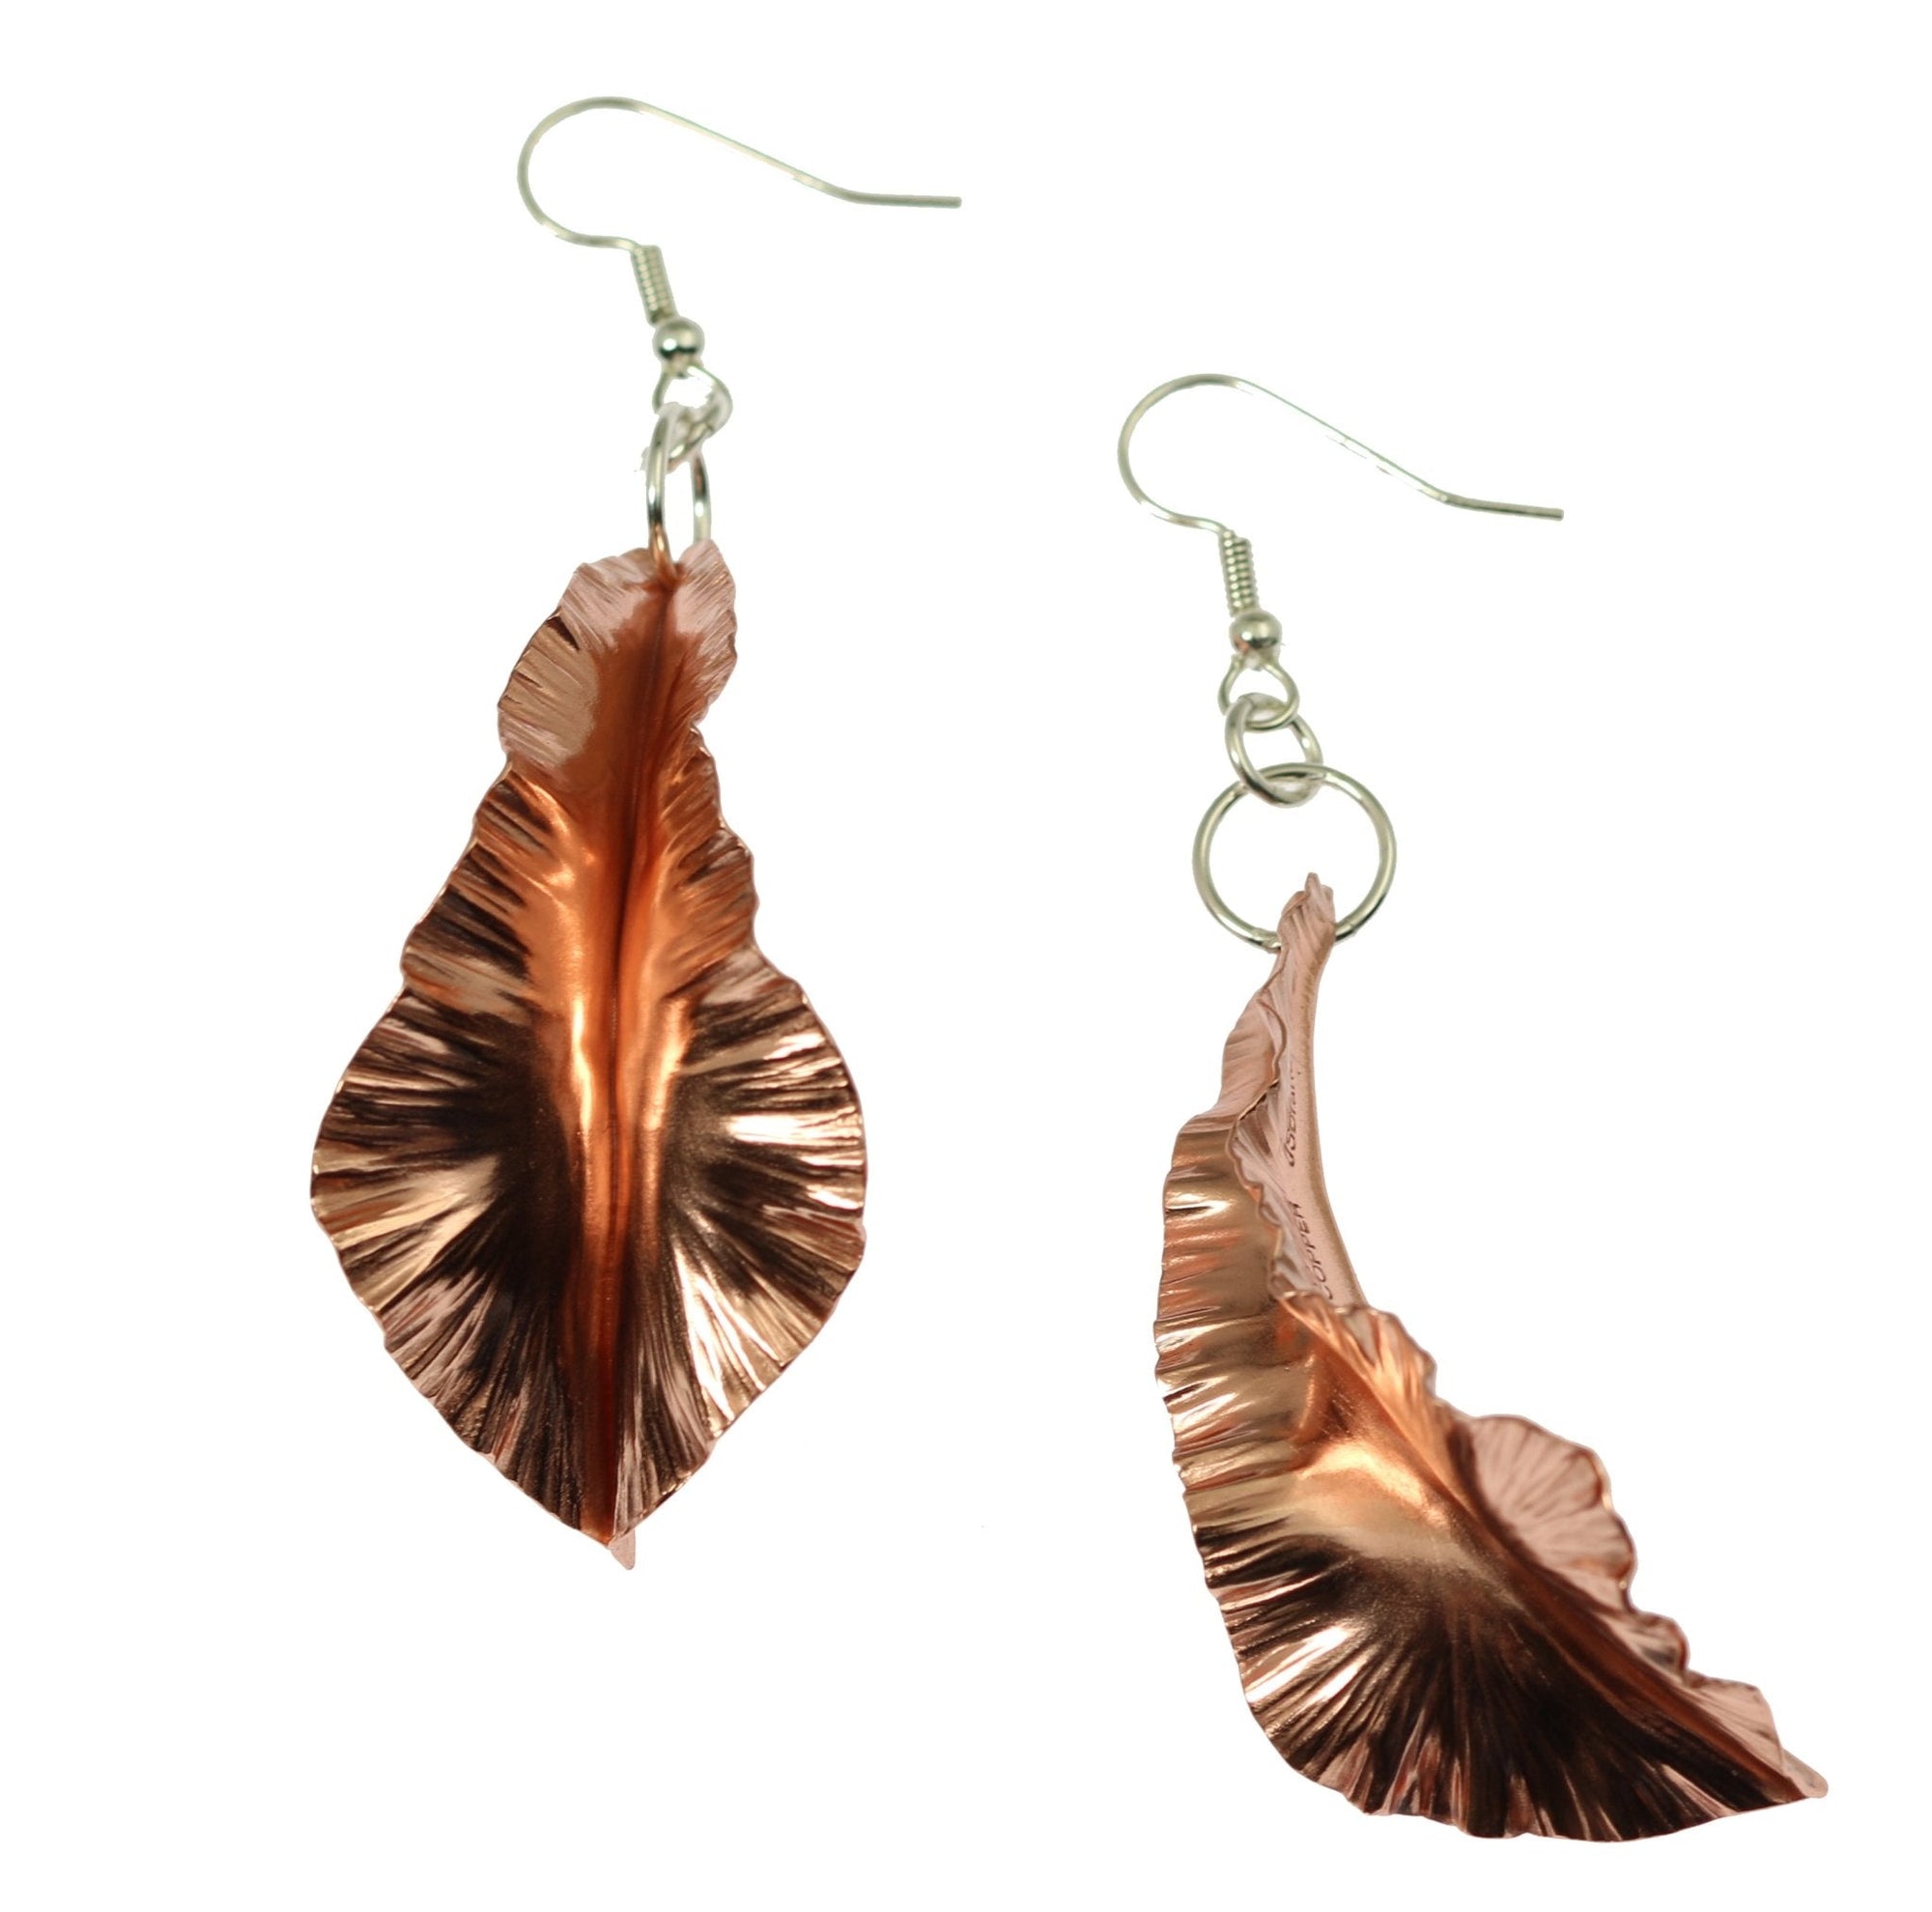 Detail View of Copper Fold Formed Leaf Dangle Earrings